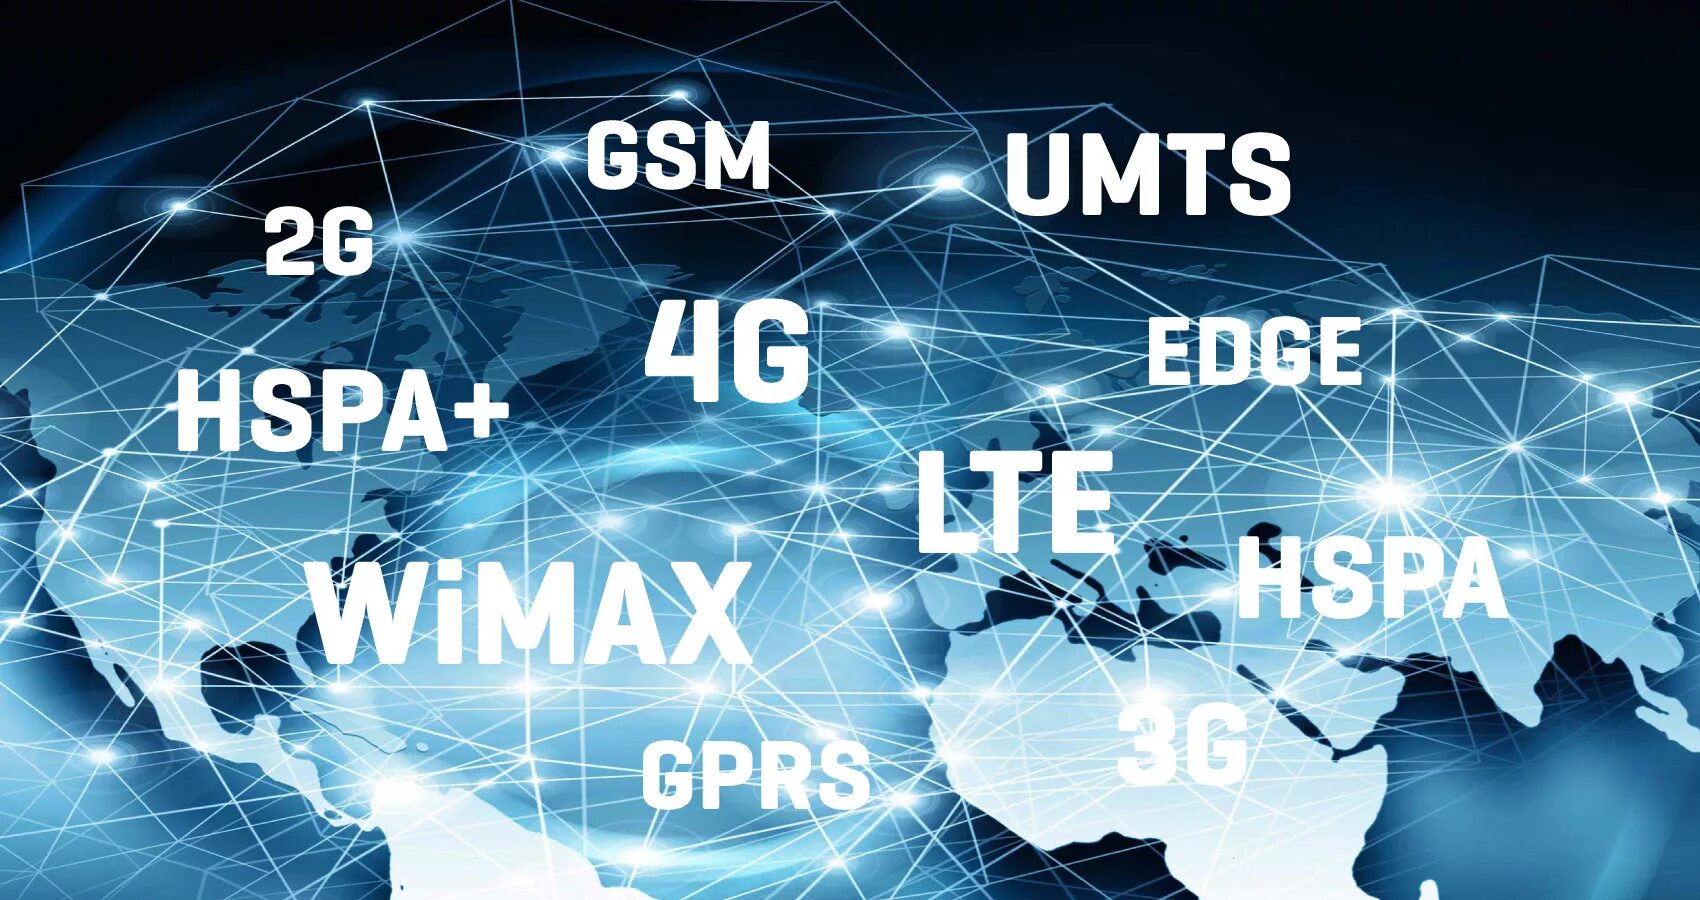 Технология 4g. GSM /2g, UMTS / 3g, LTE /4g,. 3g 4g 5g. Мобильный интернет (GPRS, 3g, 4g/LTE). Сети сотовой связи 2g 3g 4g.